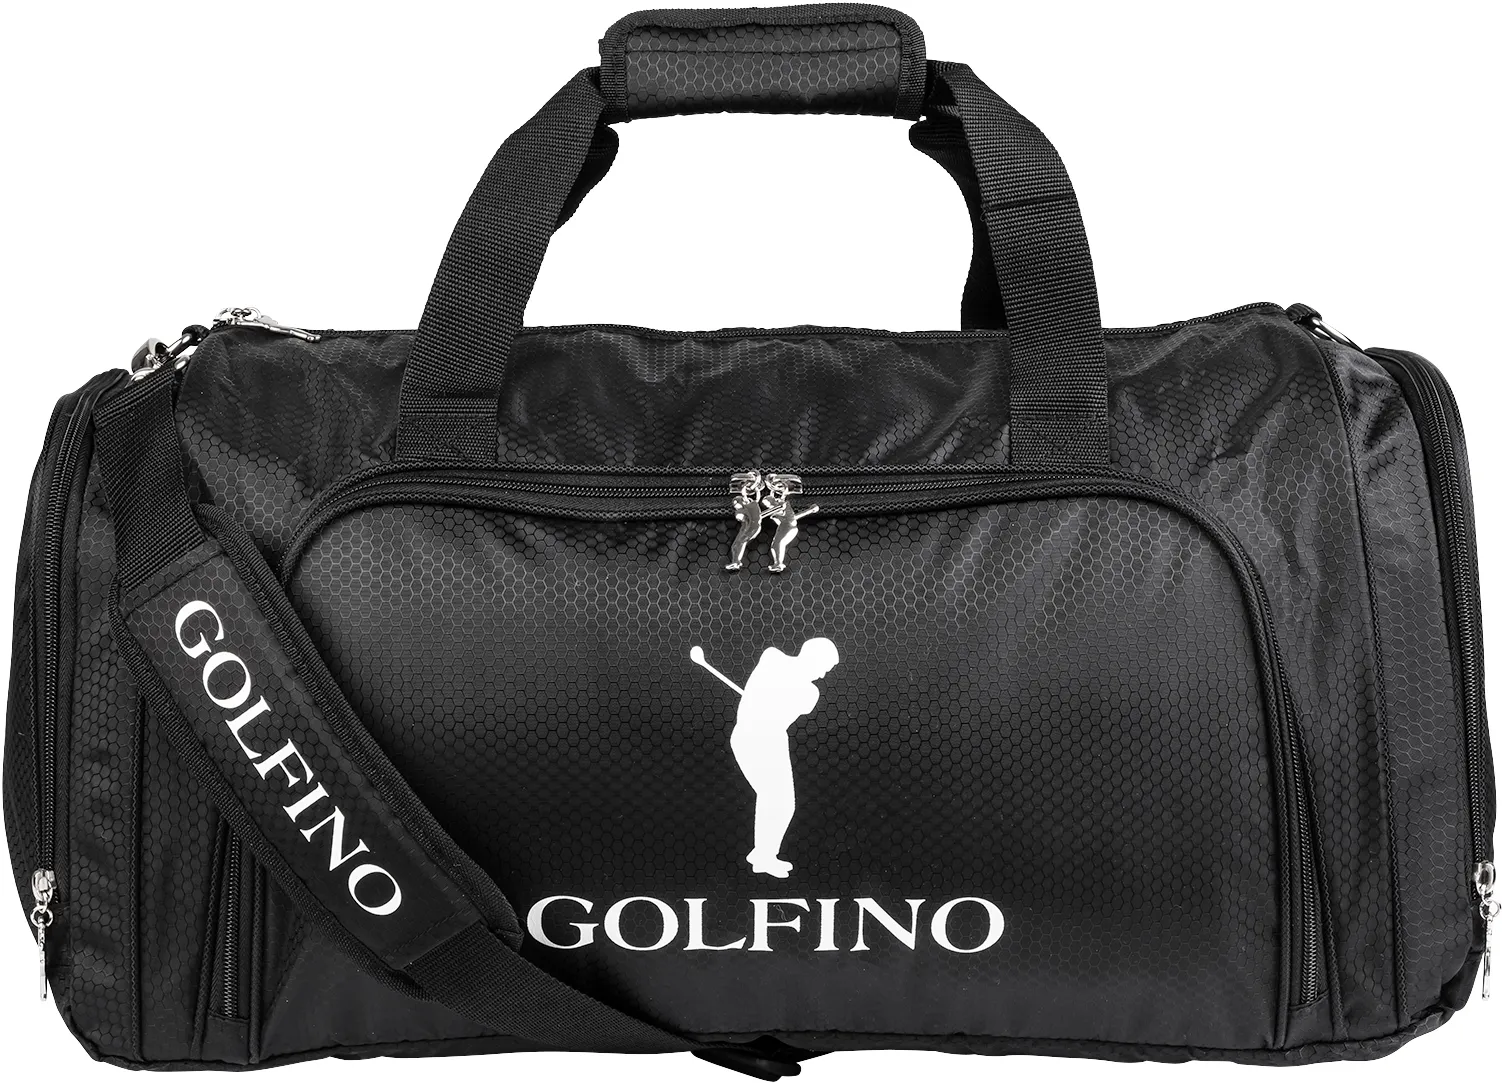 Golfino Hold-All Bag